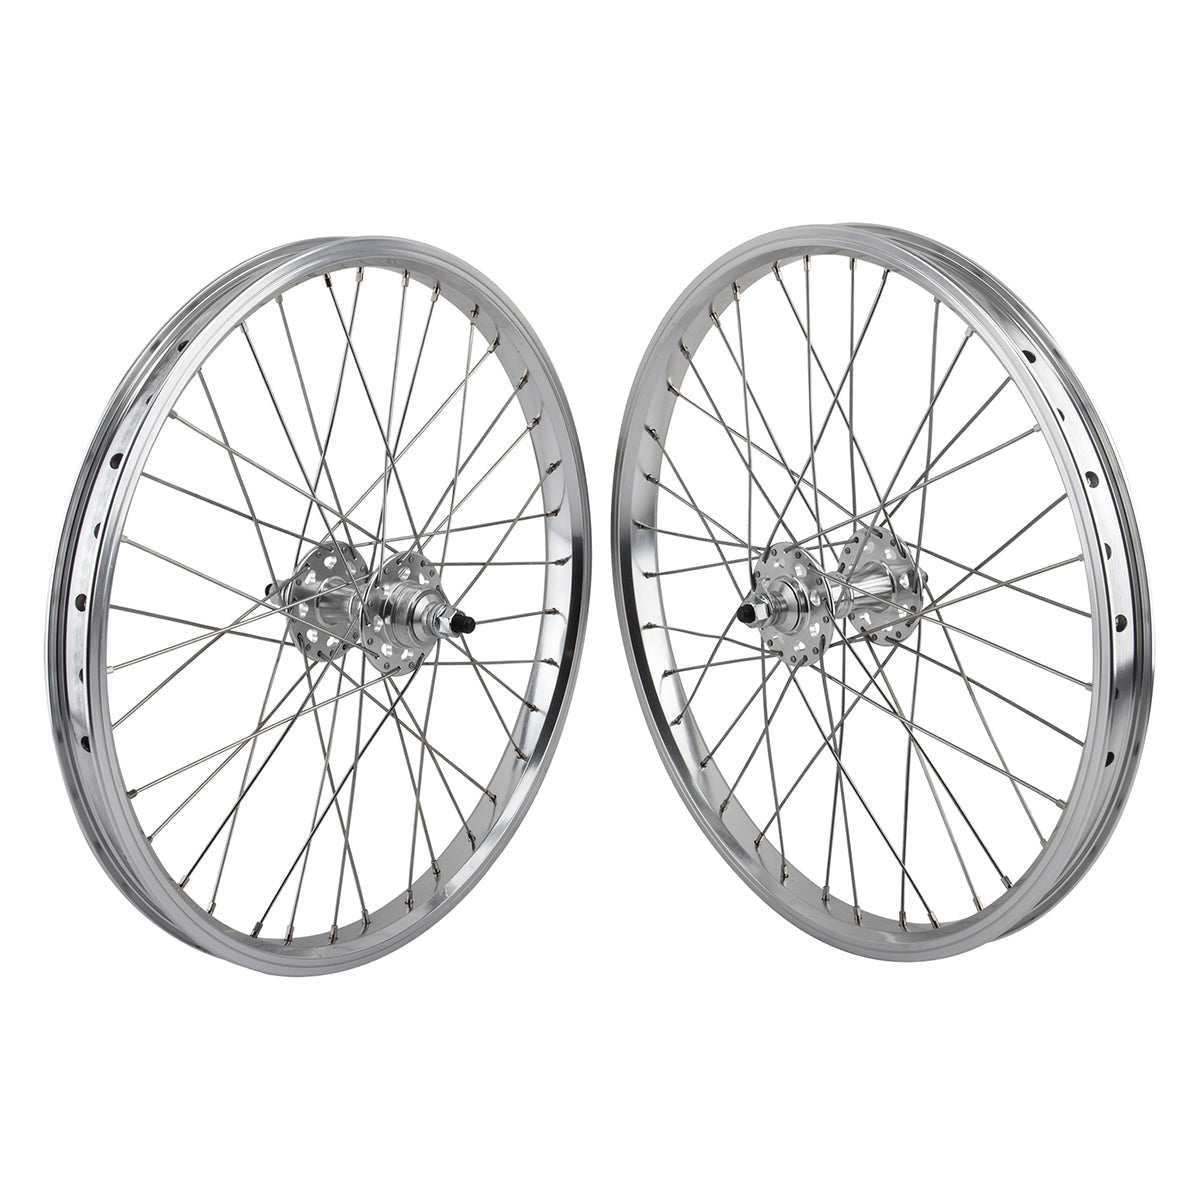 20" SE Racing Wheelset - Pair - 36H - Double Wall - Sealed Bearing - Freewheel - Silver